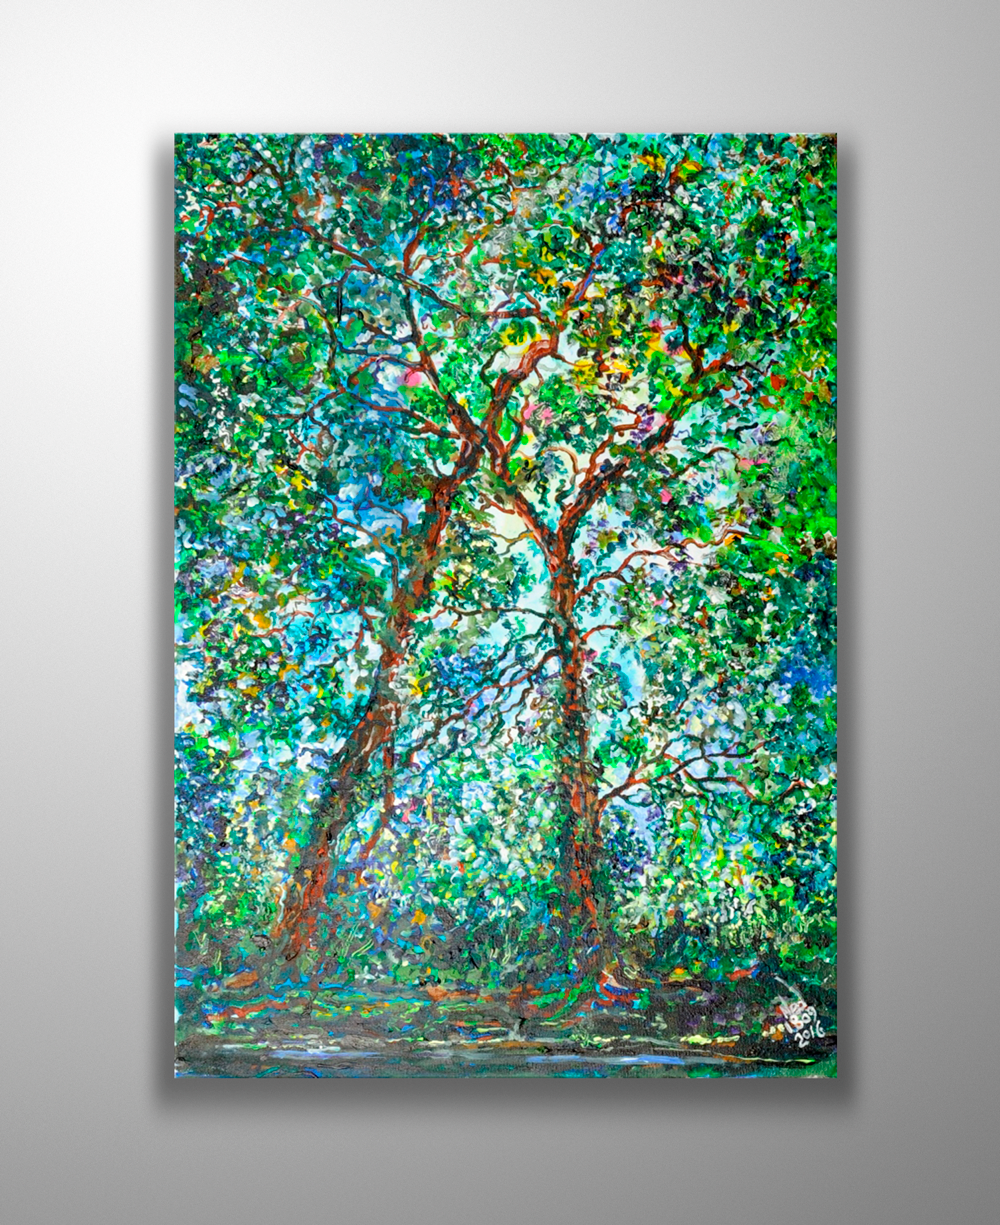 Kissing Trees Kanvas Tablo - Ned Pamphilon